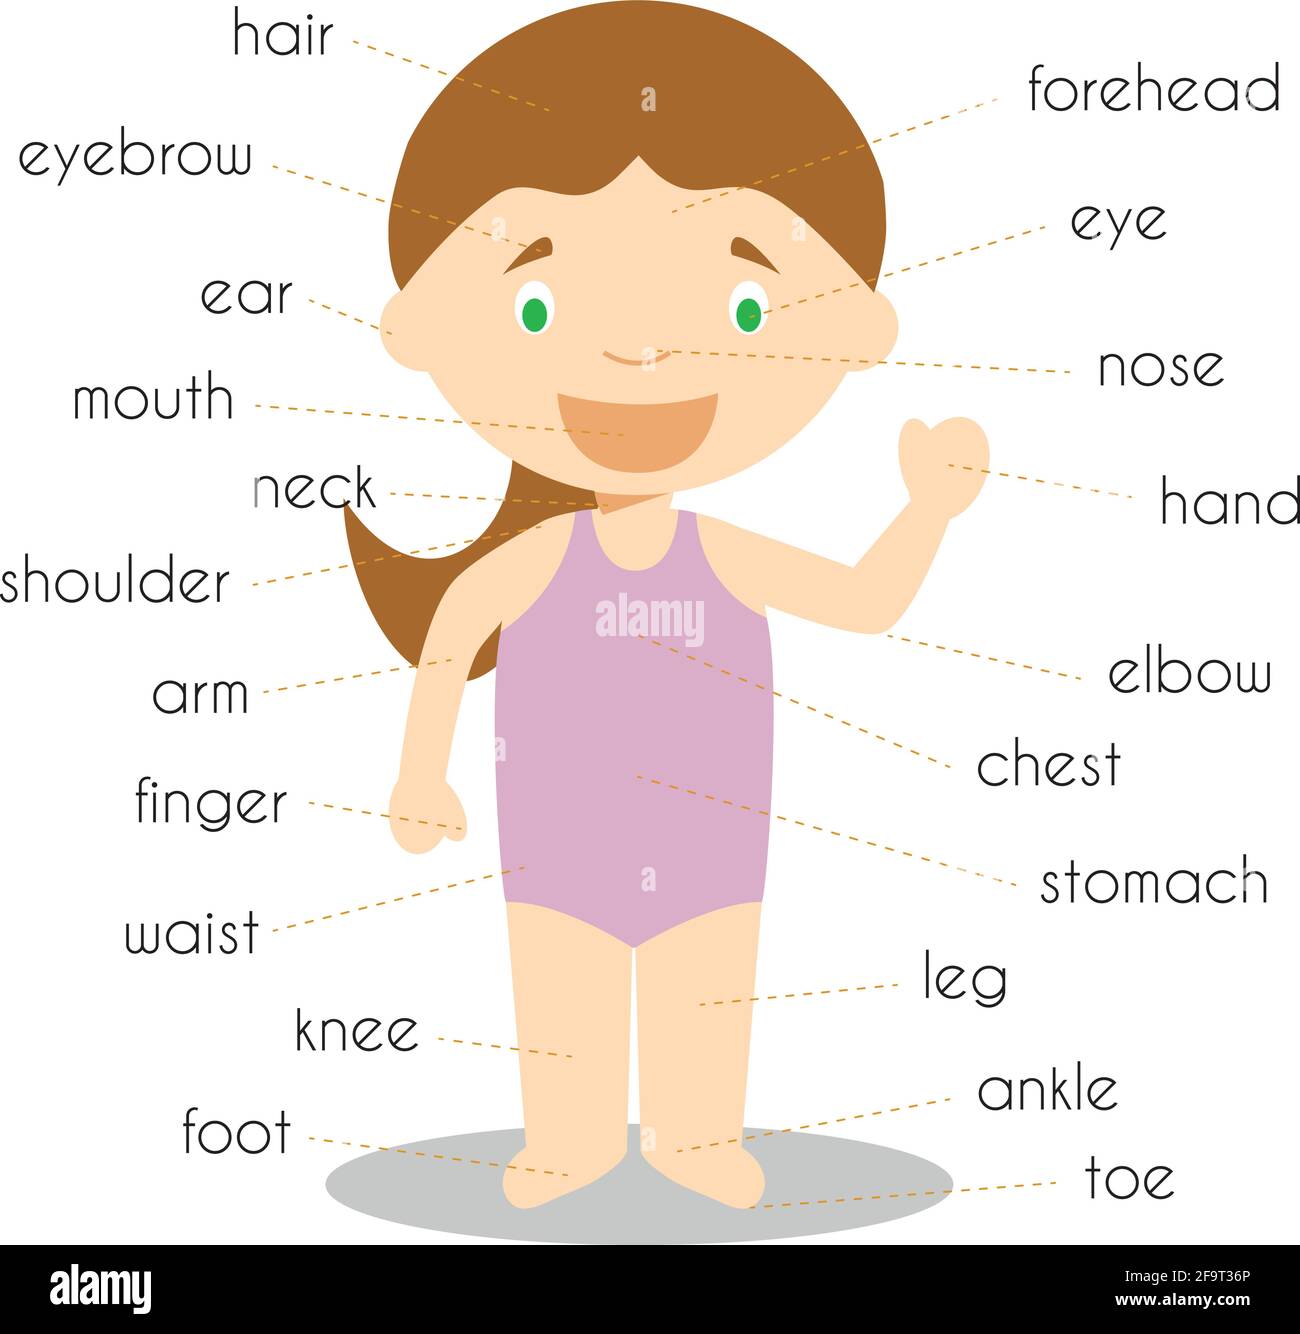 Human Body Parts Vocabulary Vector Illustration Stock Vector Image